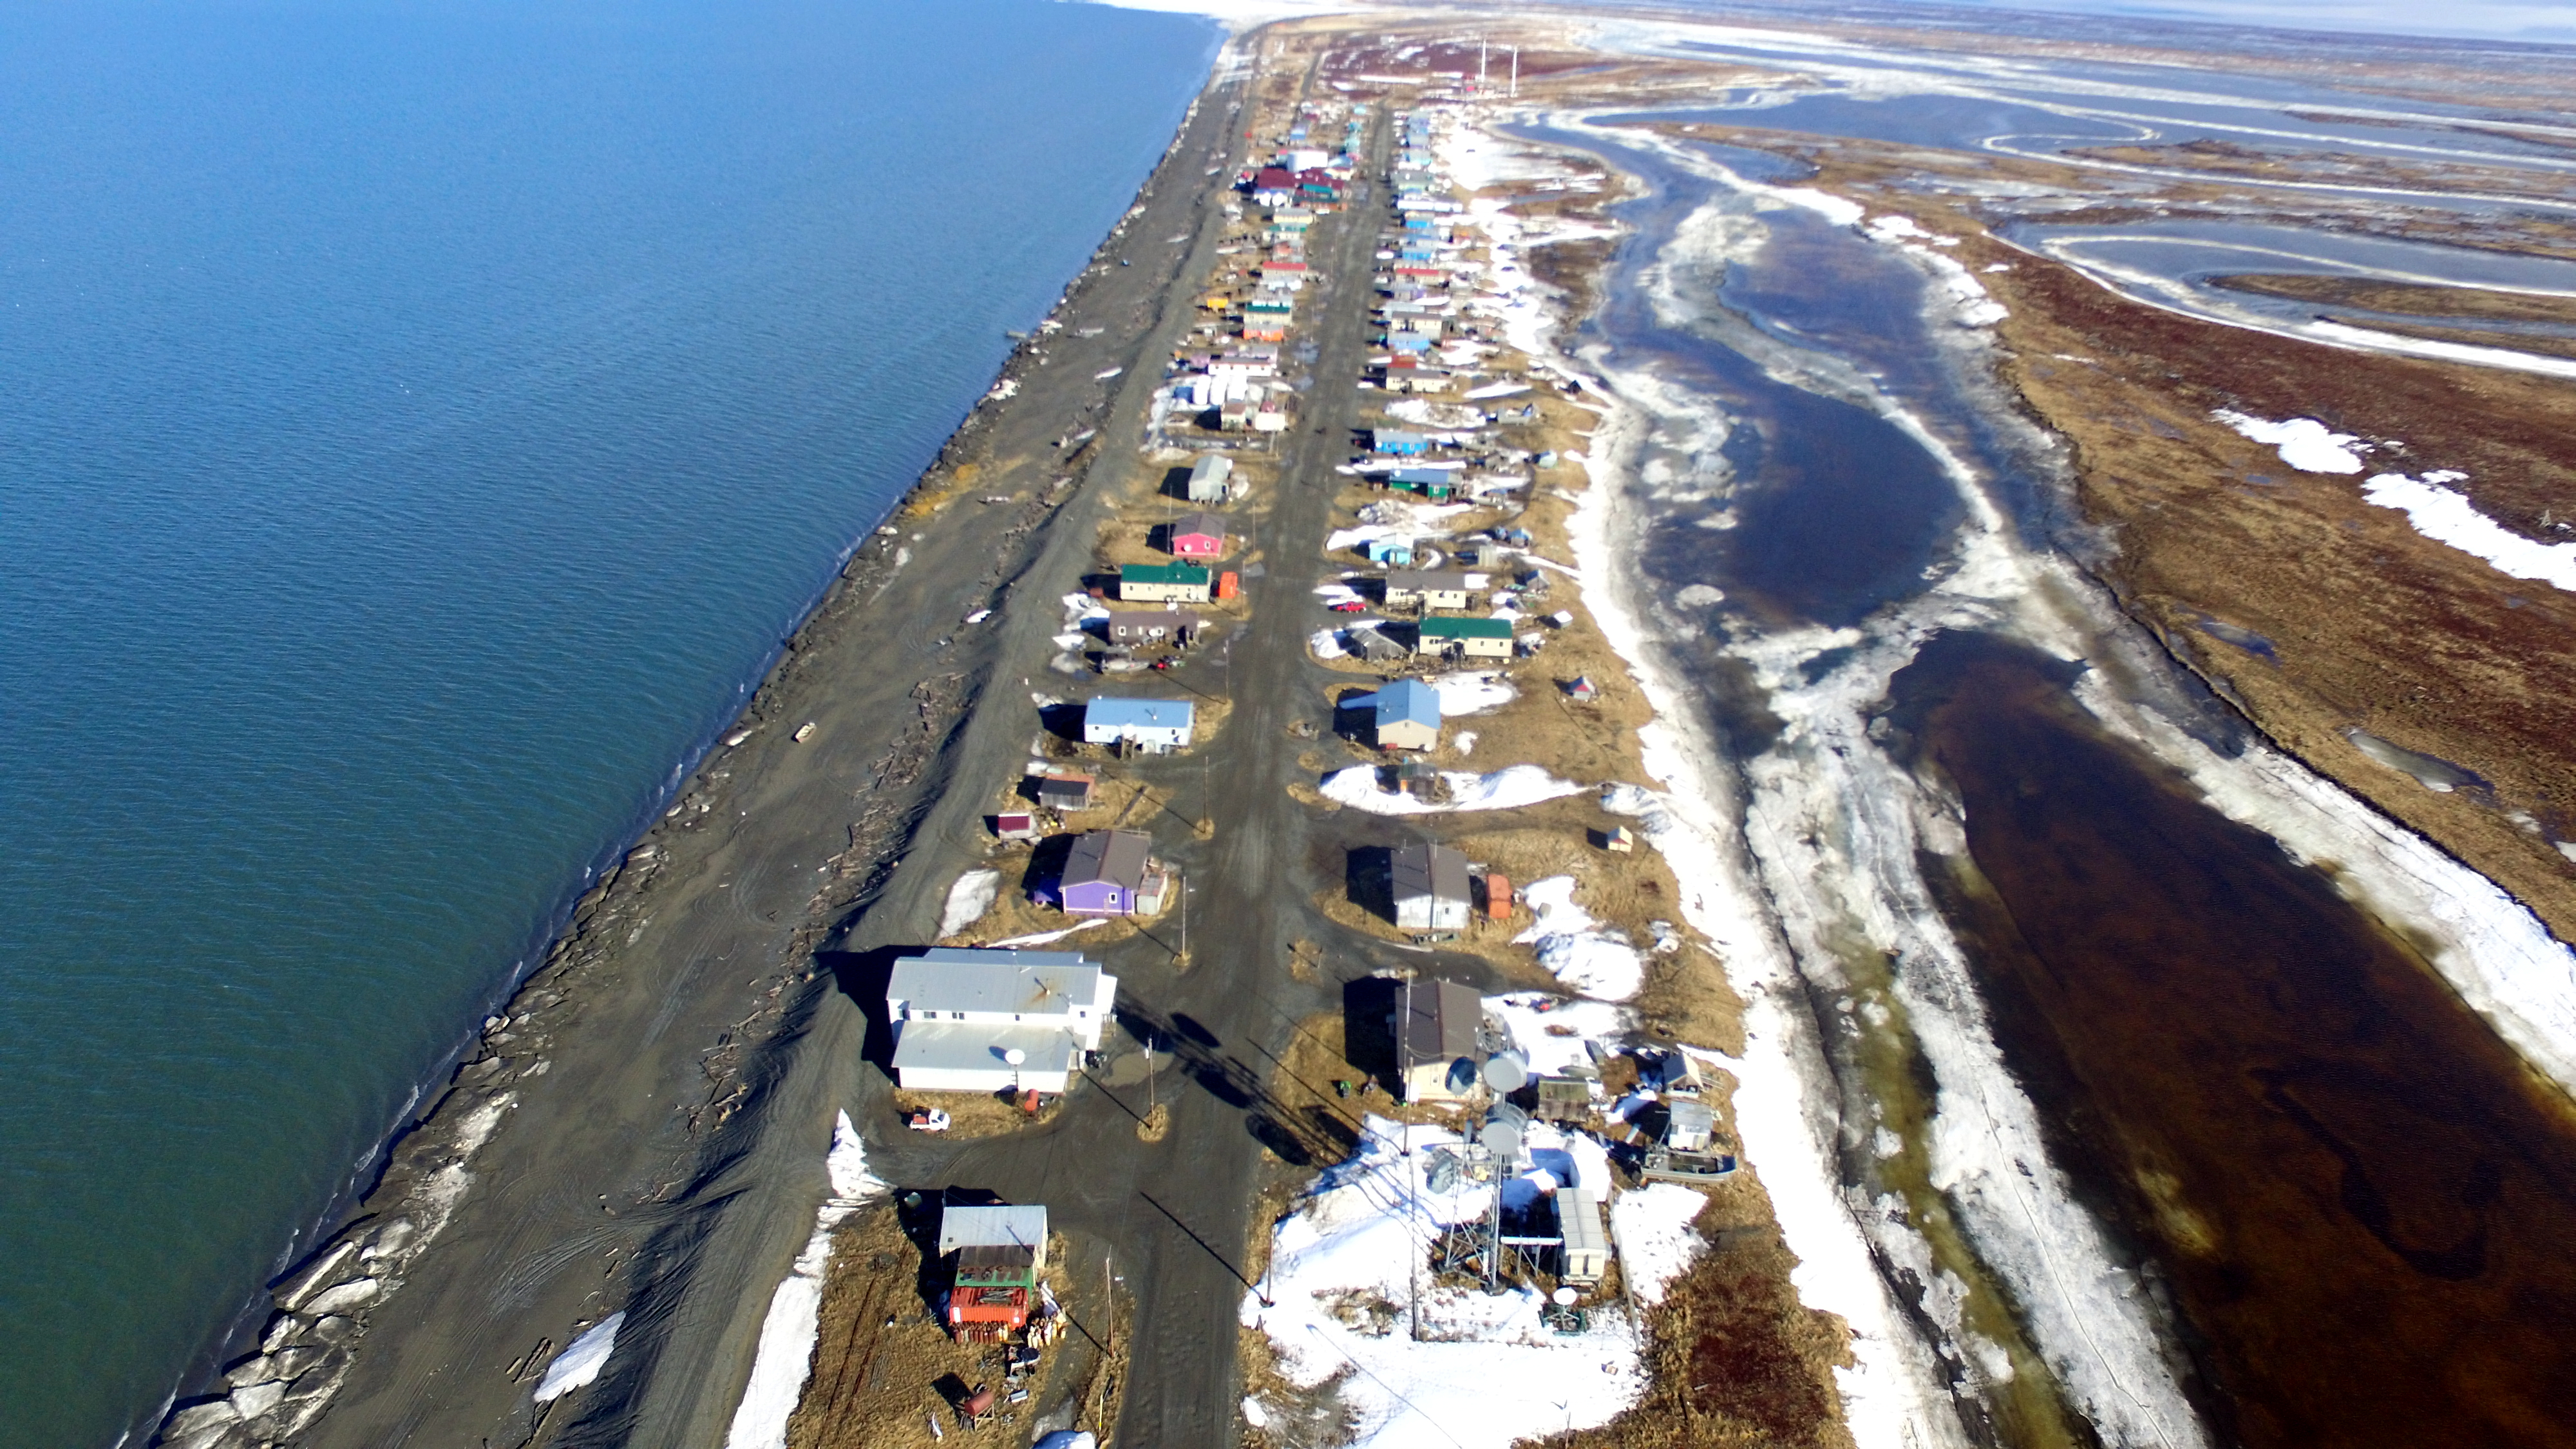 Shaktoolik Alaska - Threatened by climate change